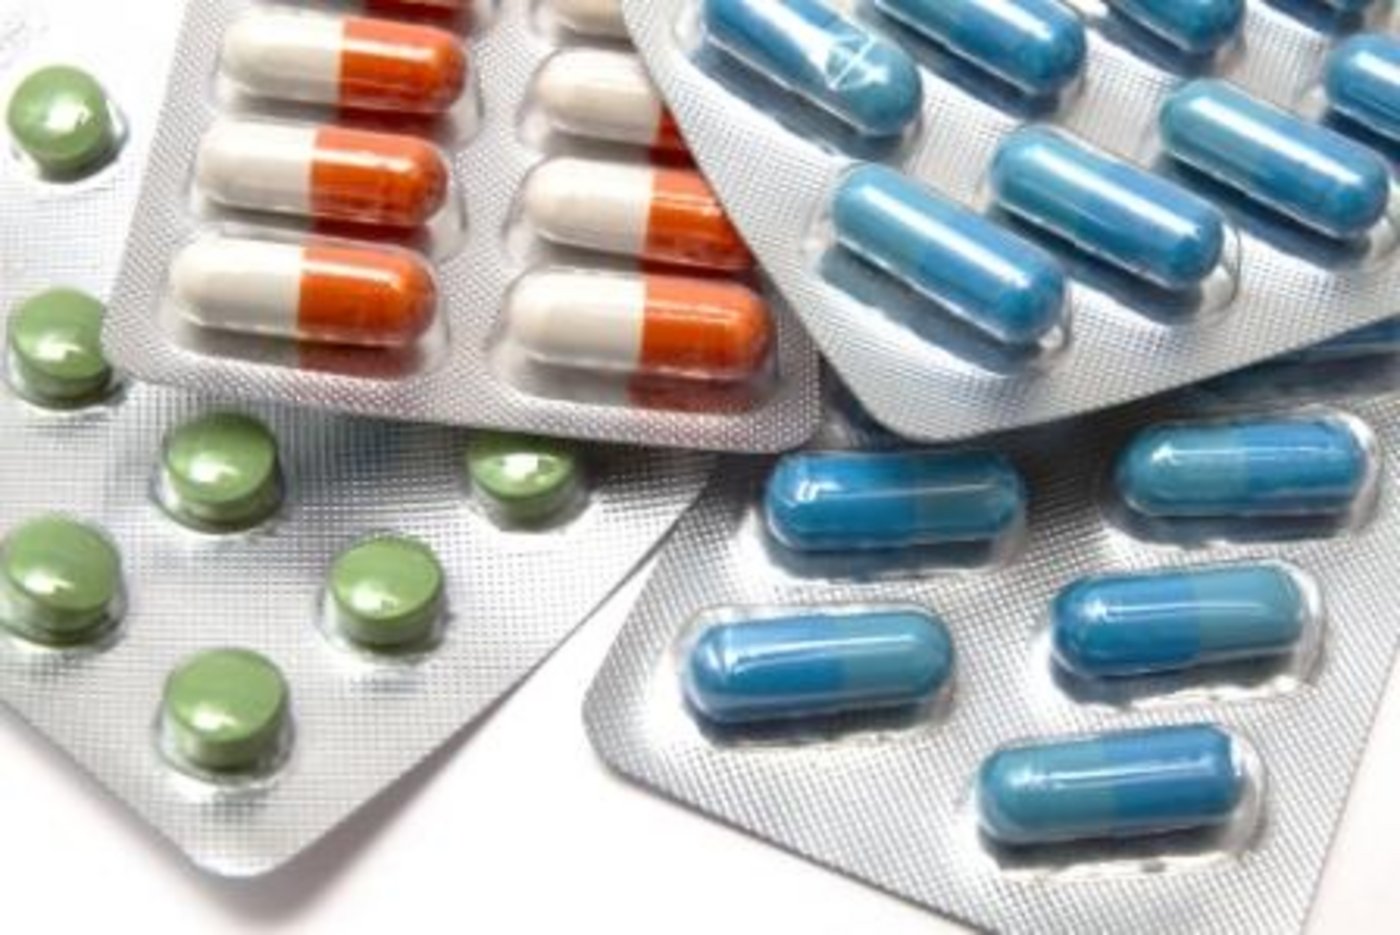 Amendments to the Pharmacovigilance System (Directive)